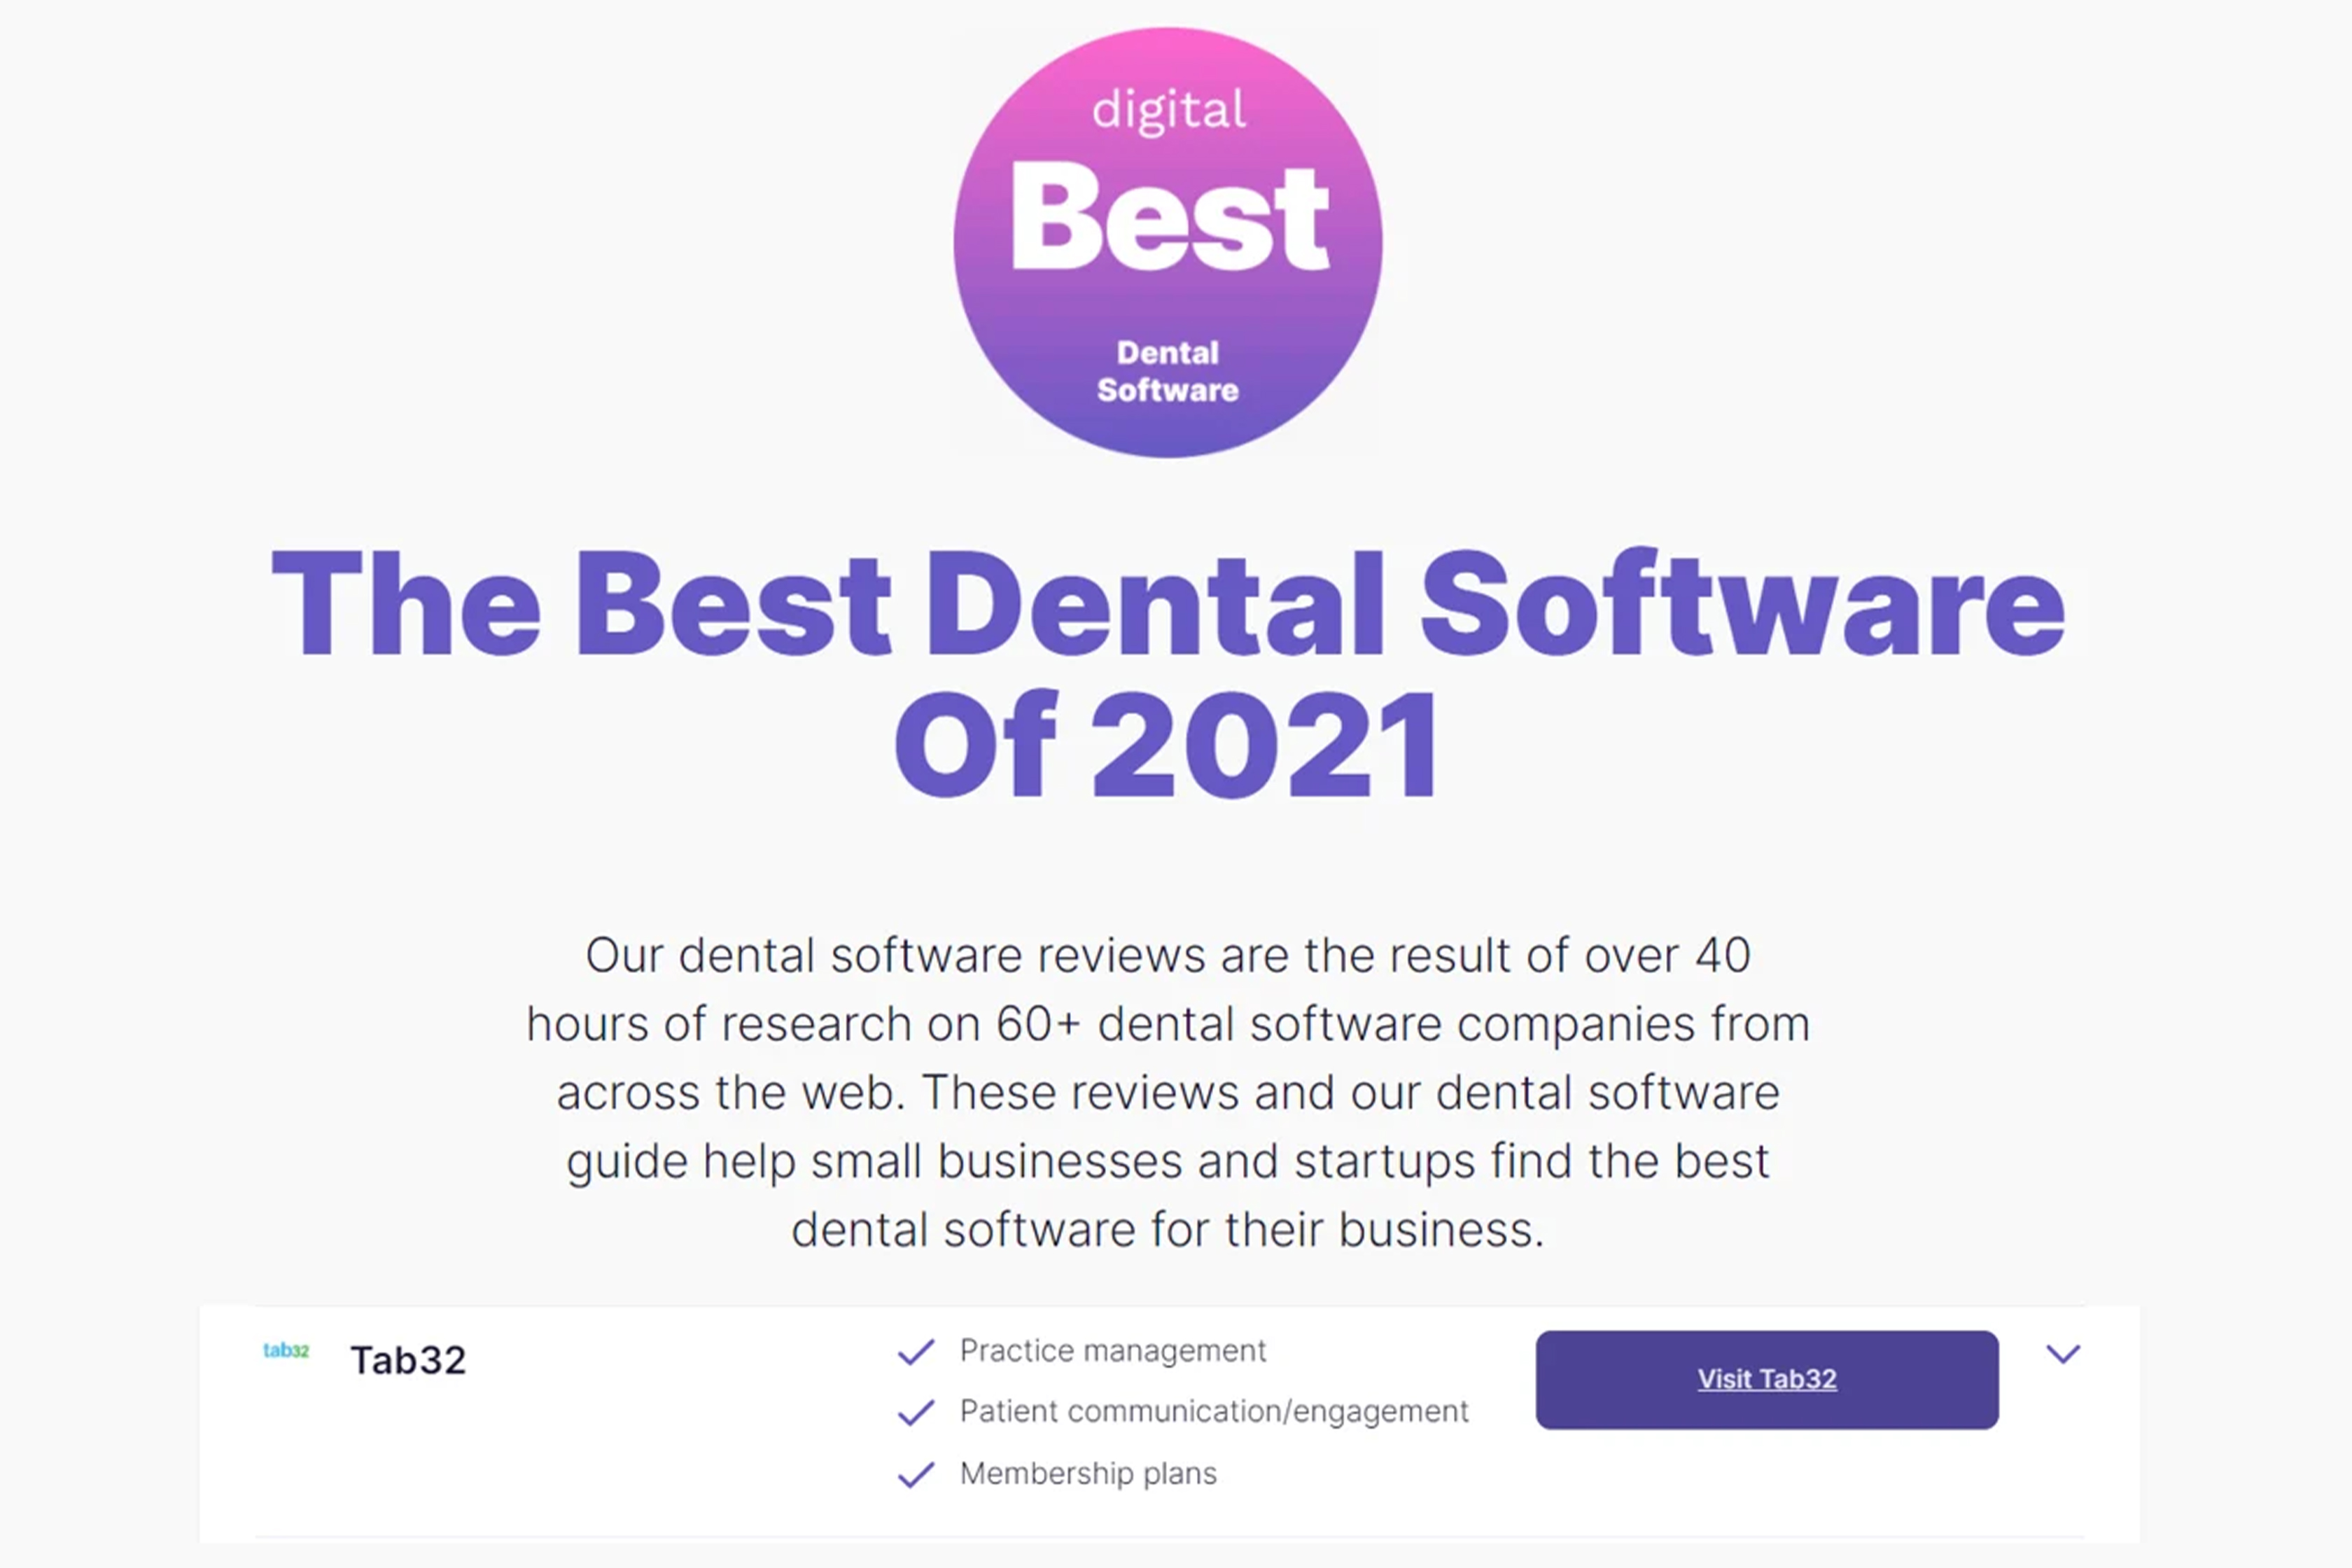 tab32 Named Best Dental Software of 2021 by Digital.com